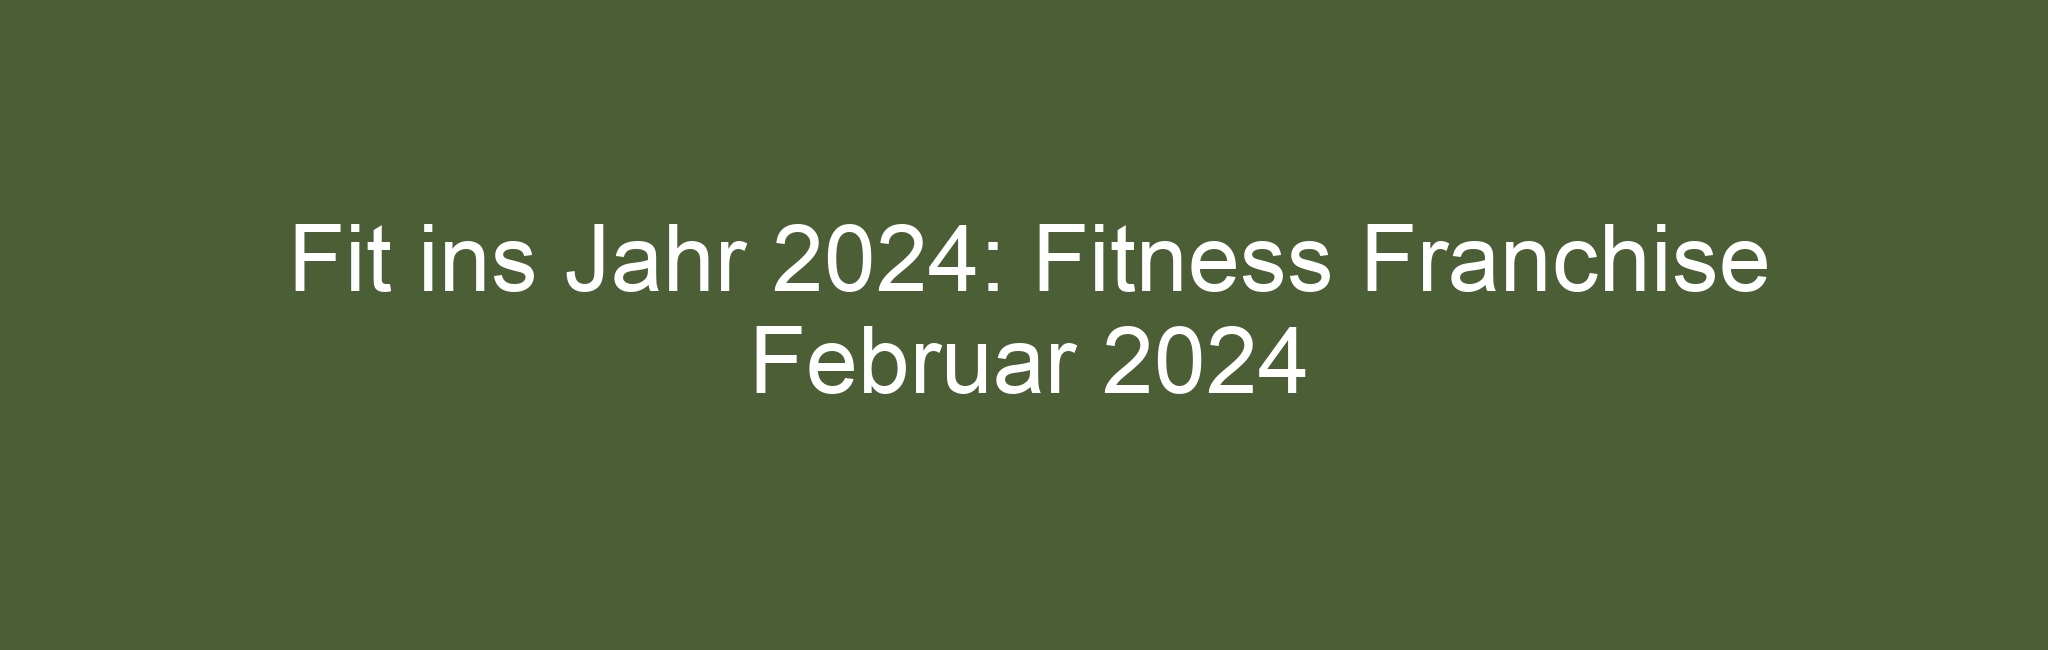 Fit ins Jahr 2024: Fitness Franchise Februar 2024